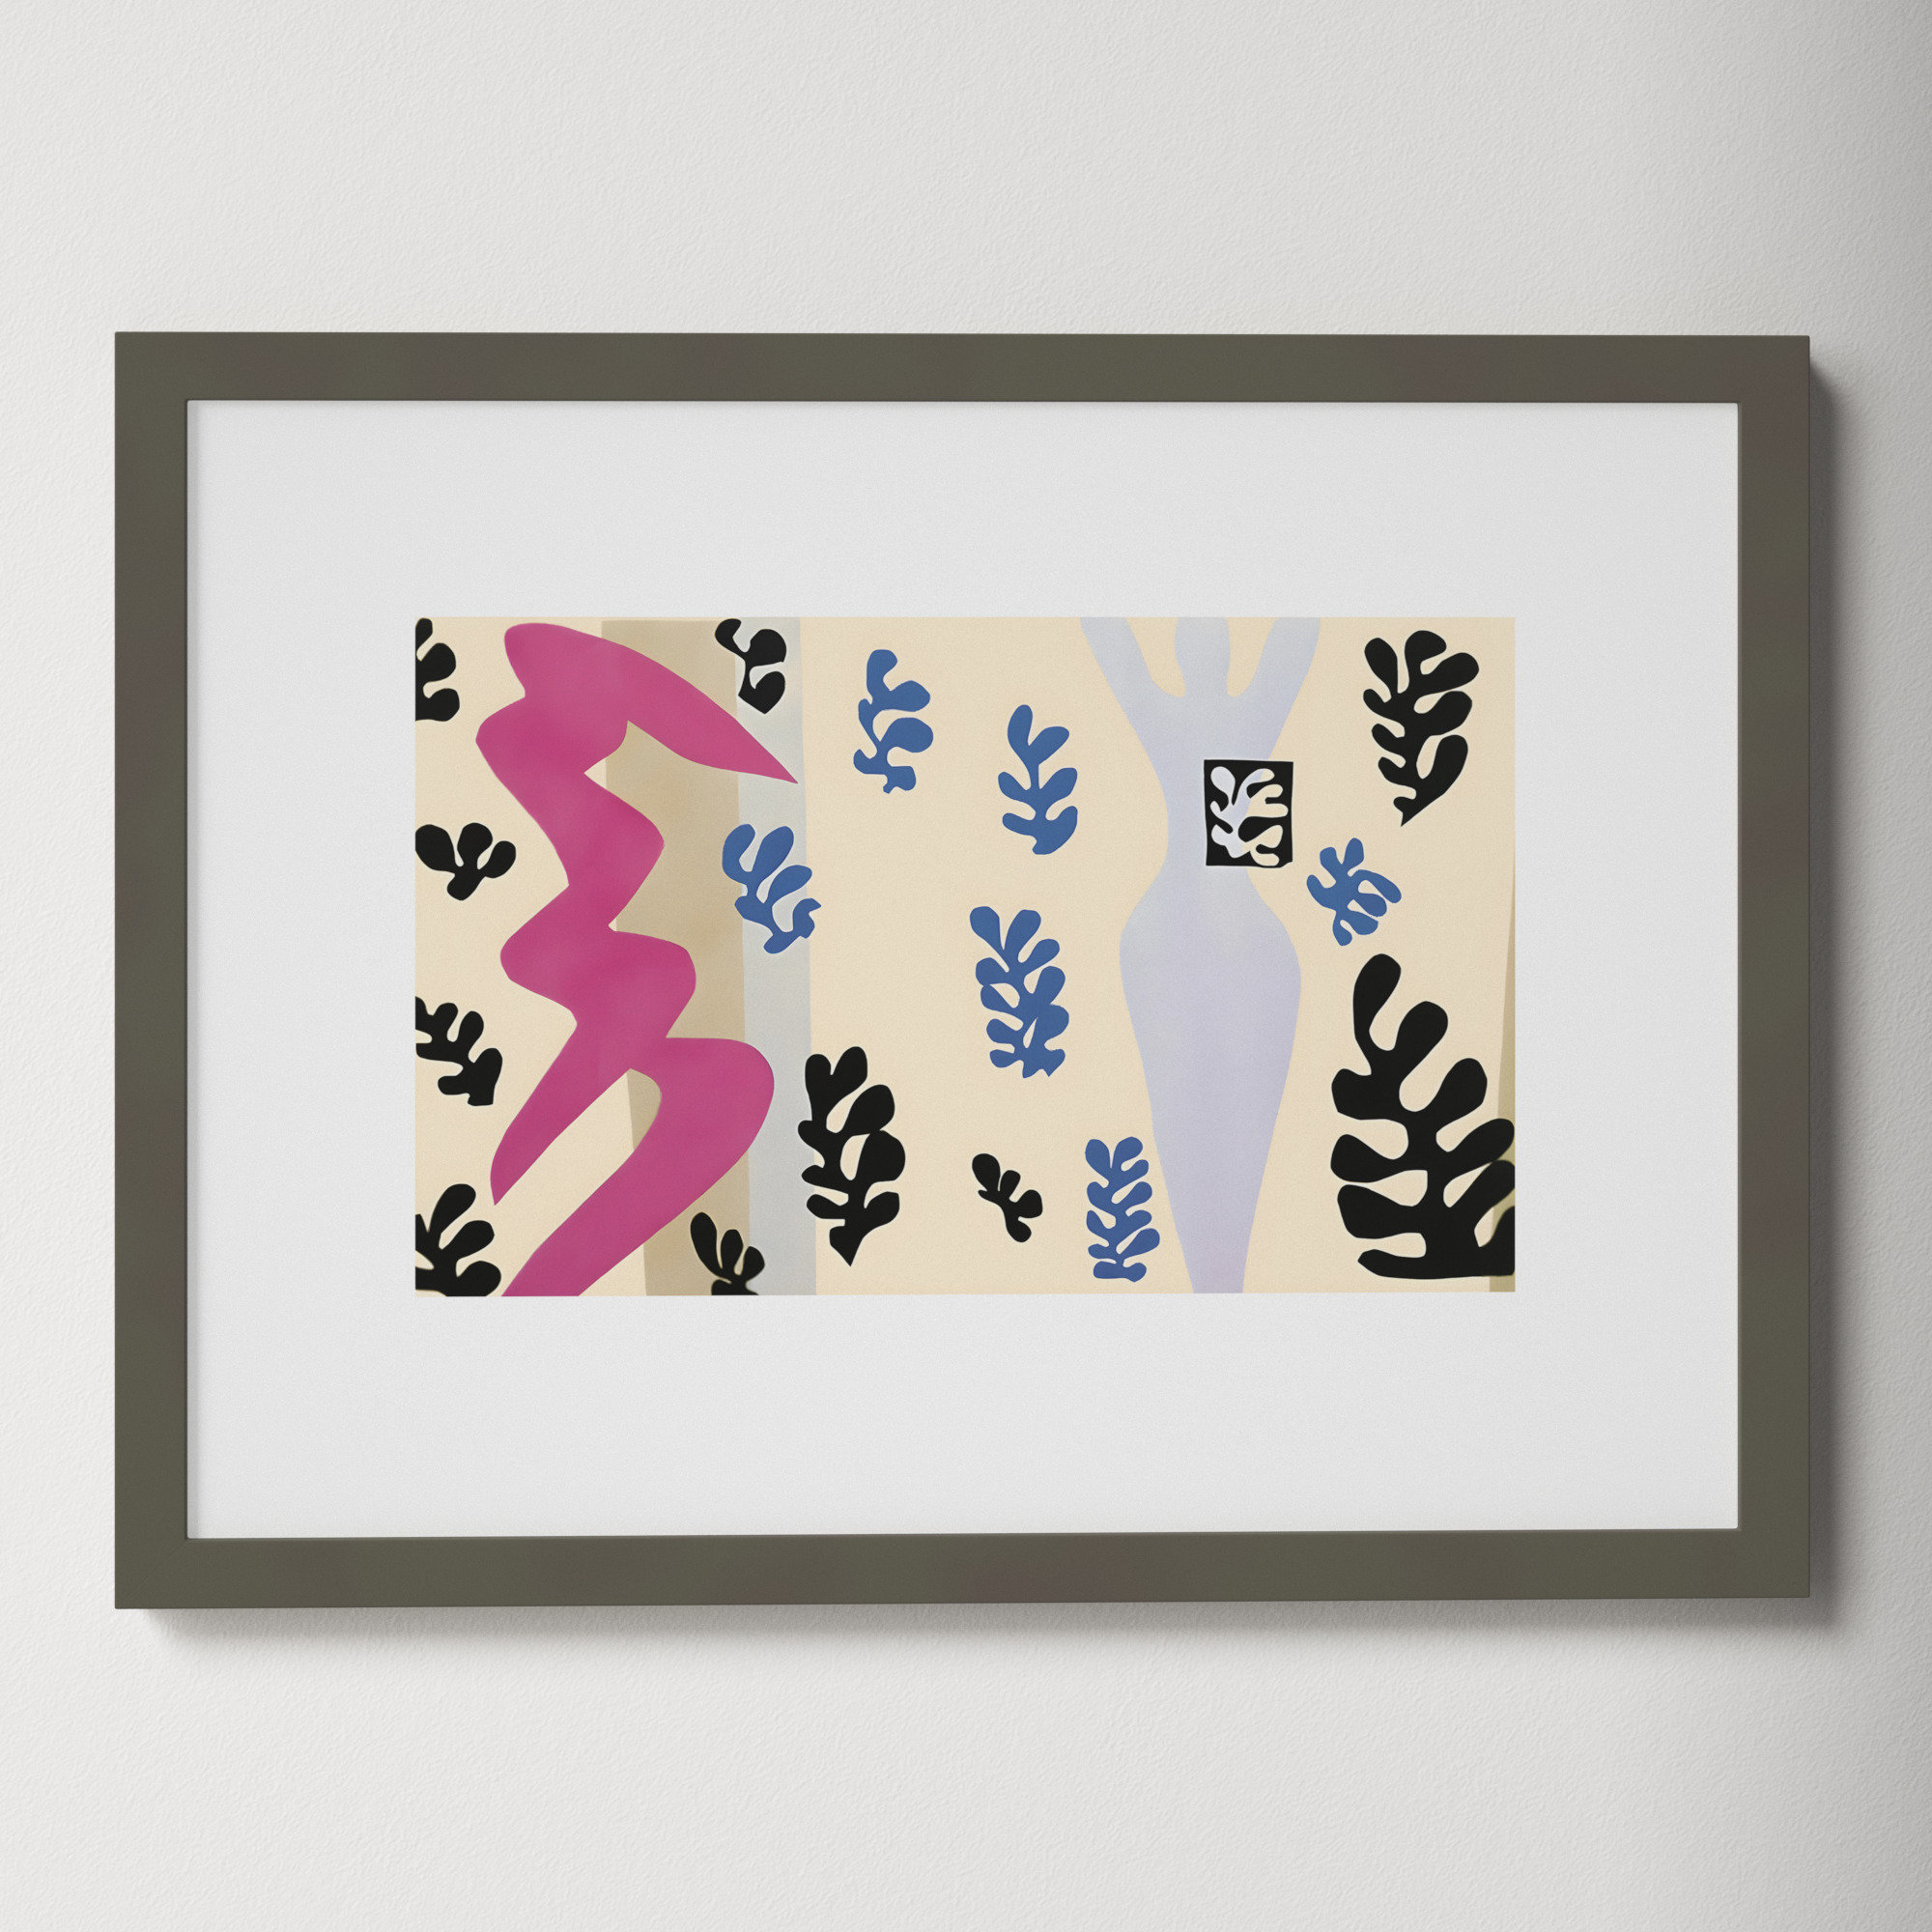 Henti Matisse Shower Curtain Paper Cut Art Printing Shower